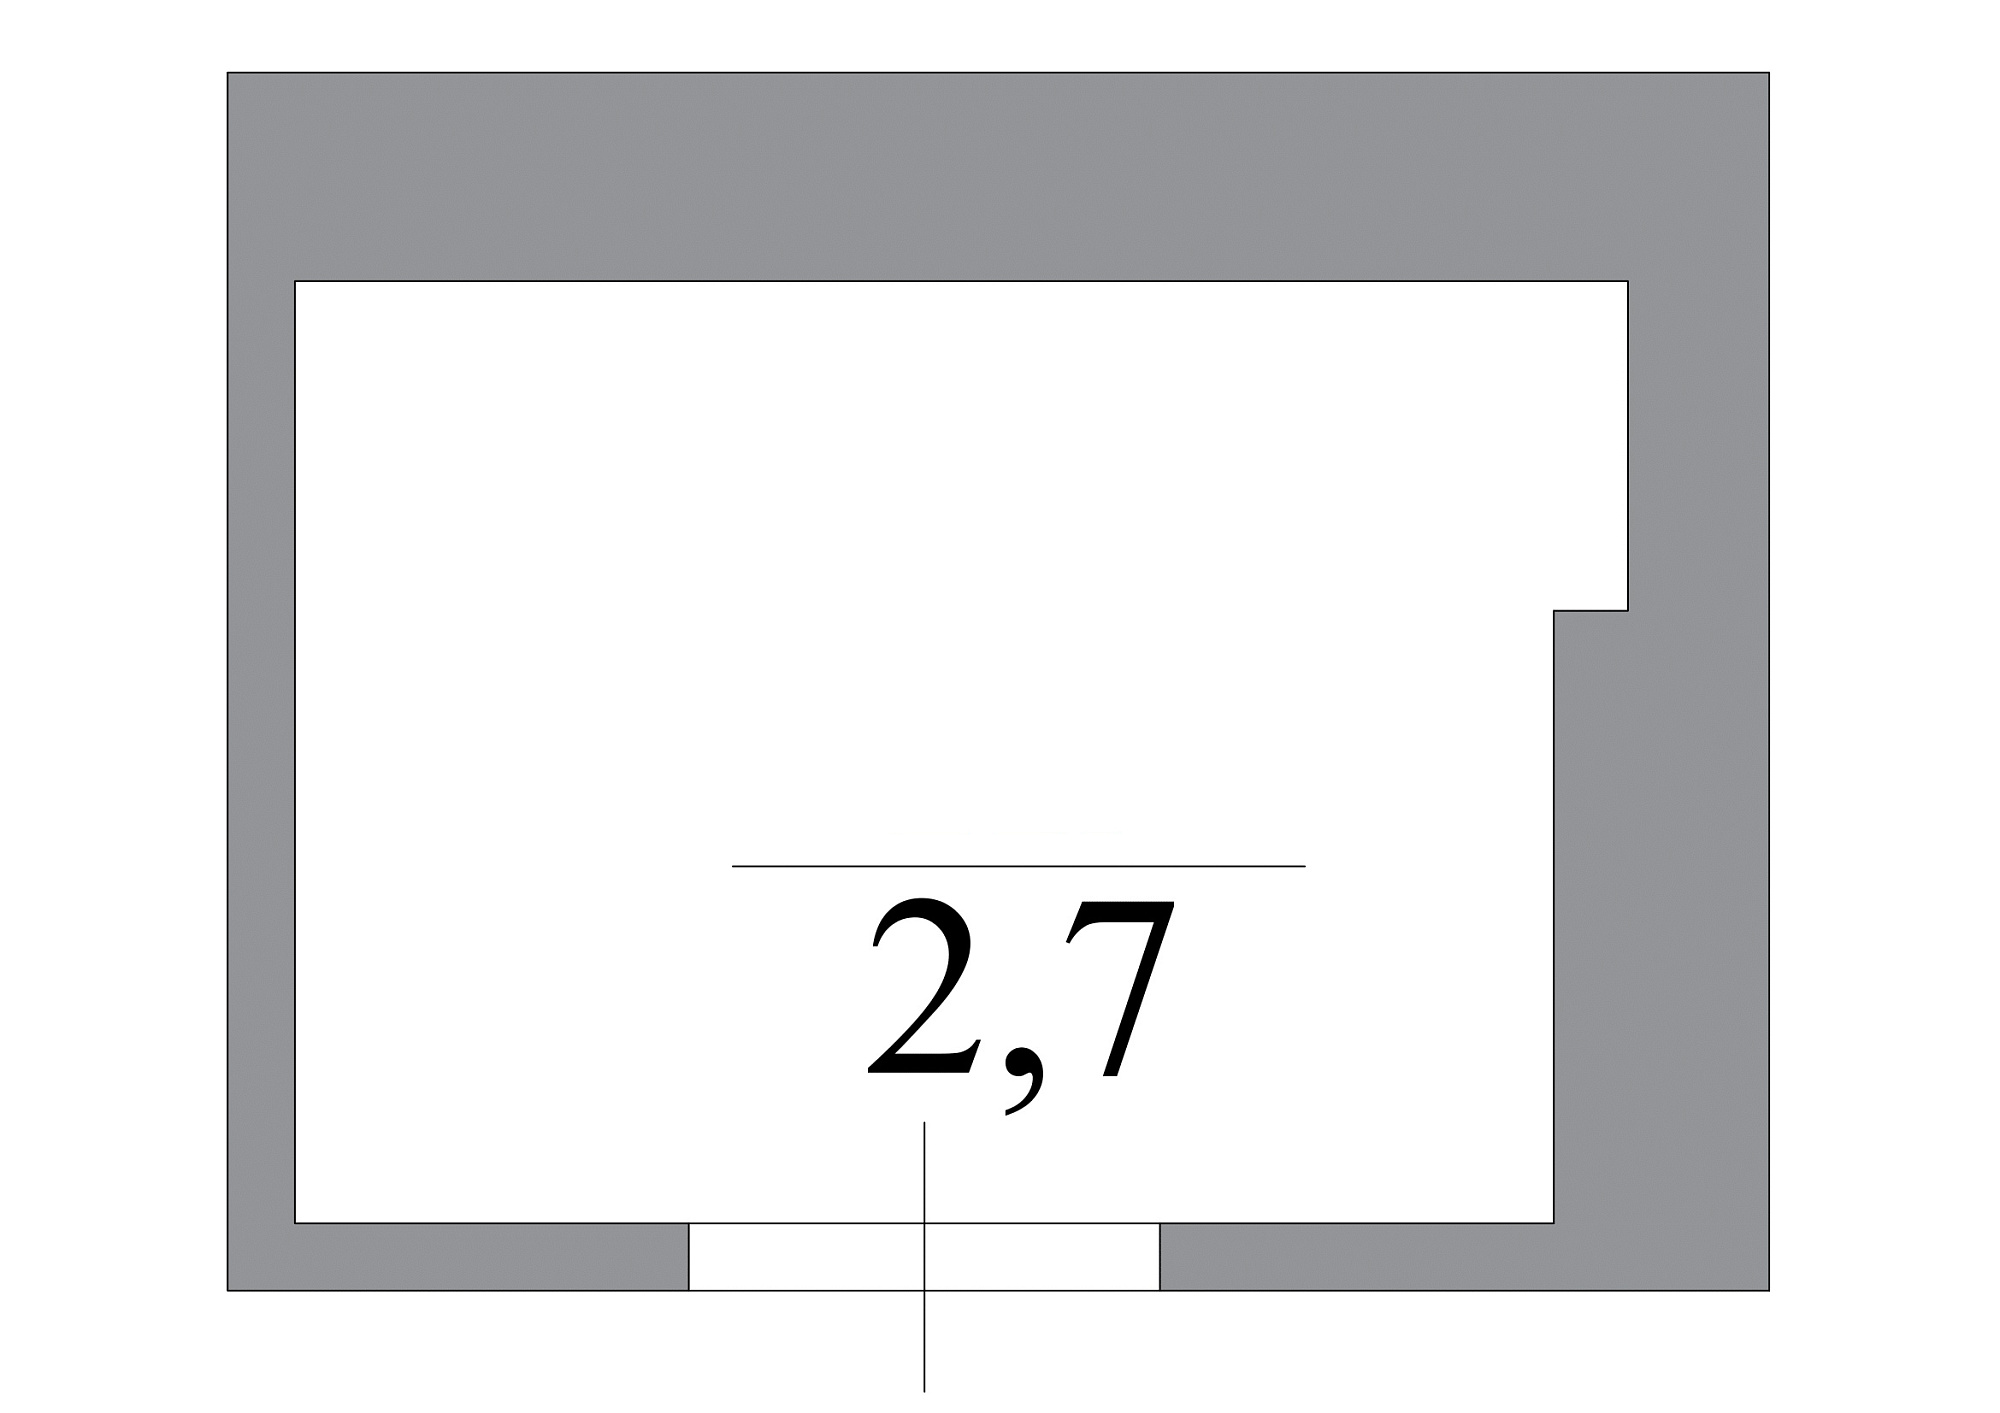 Planning Storeroom area 2.7m2, AB-07-м1/К0040.